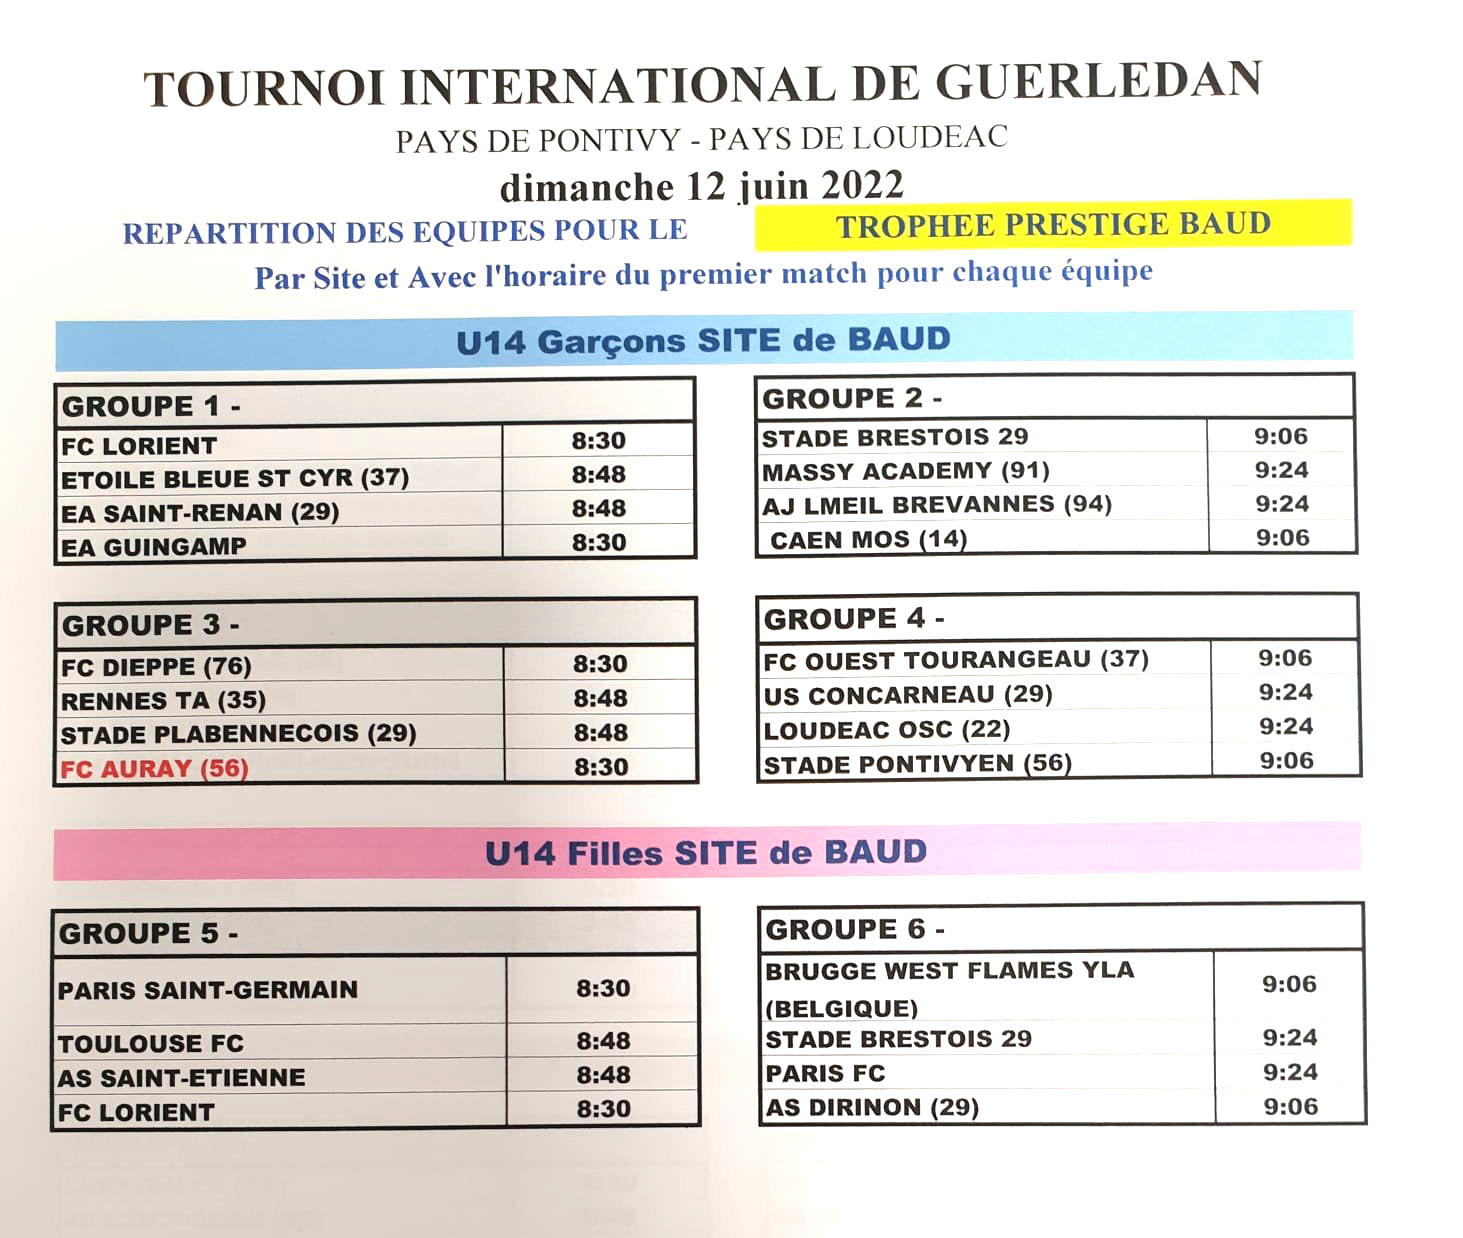 https://www.tournoi-international-guerledan.com/wp-content/uploads/2022/06/Trophee-Prestige-Baud.jpg